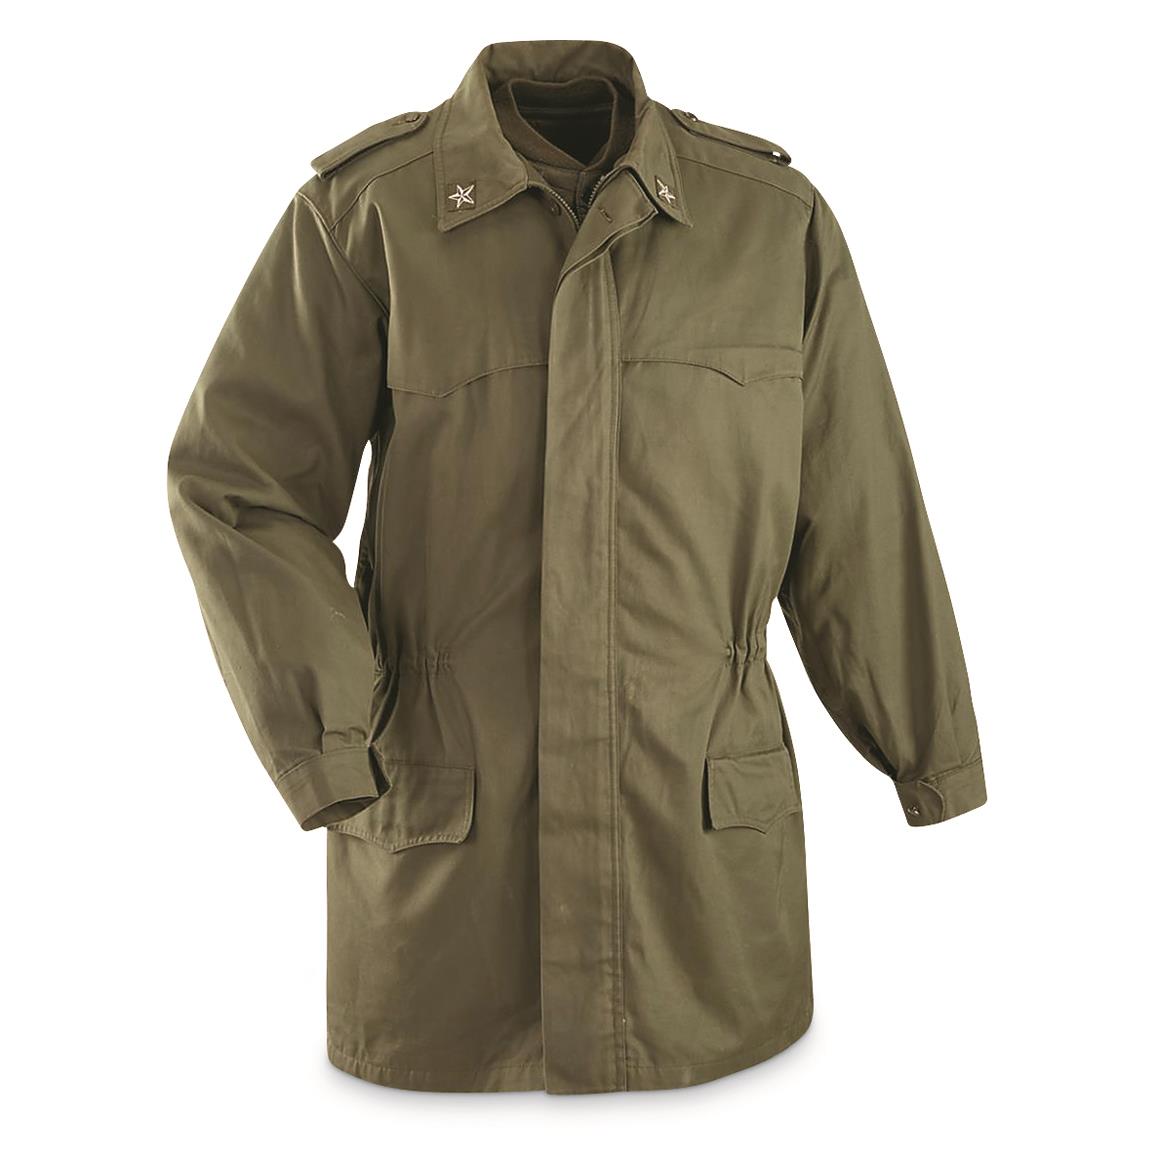 Italian Military Surplus Parka Jacket with Liner, Used, Olive Drab